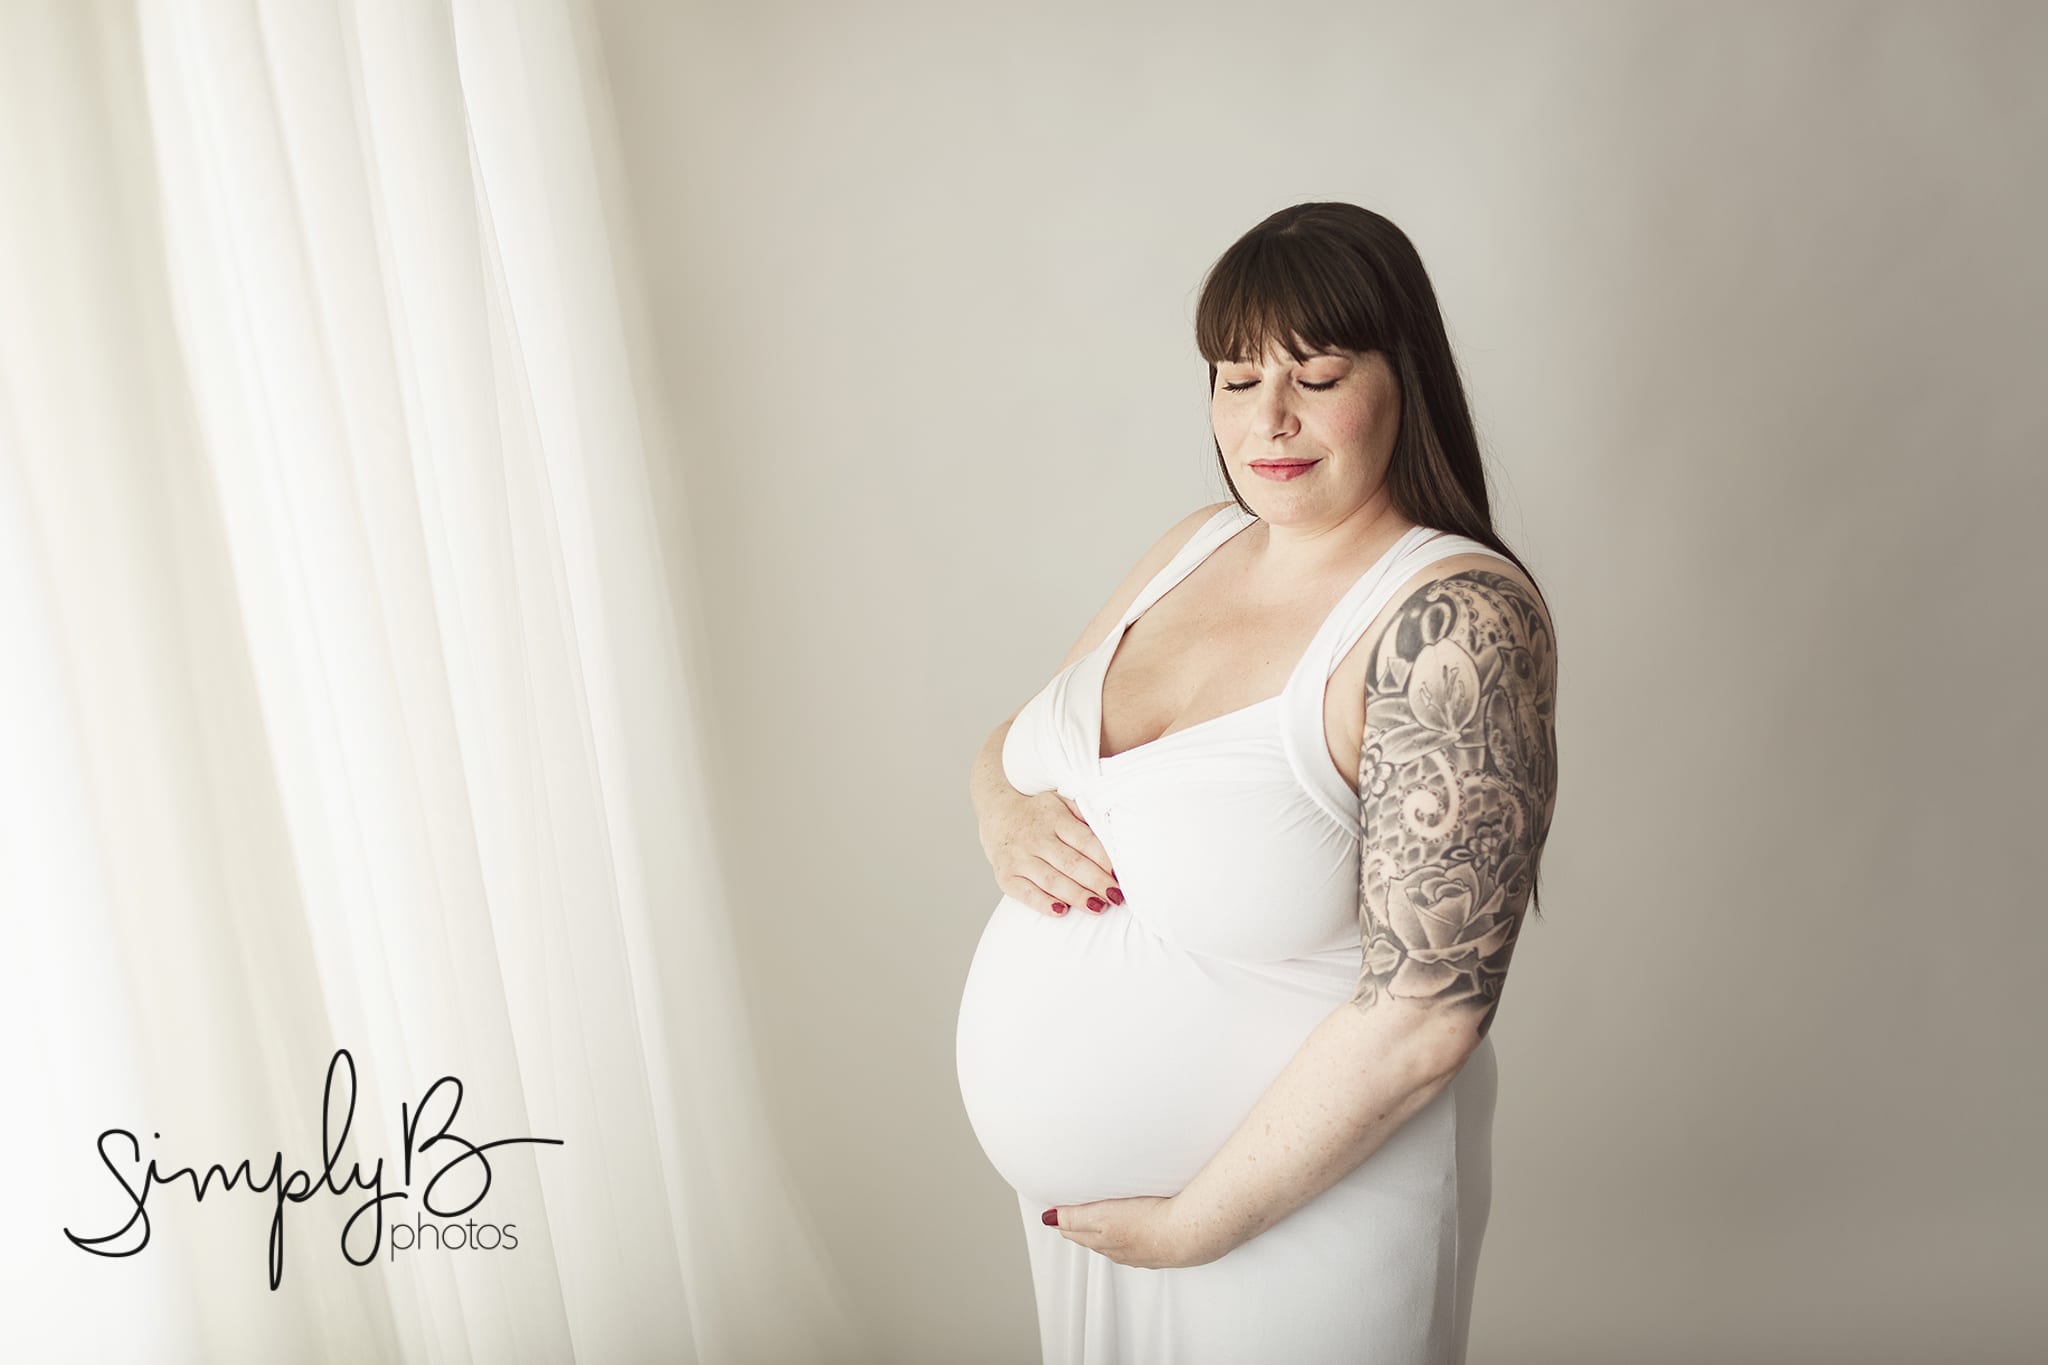 Edmonton maternity photographer